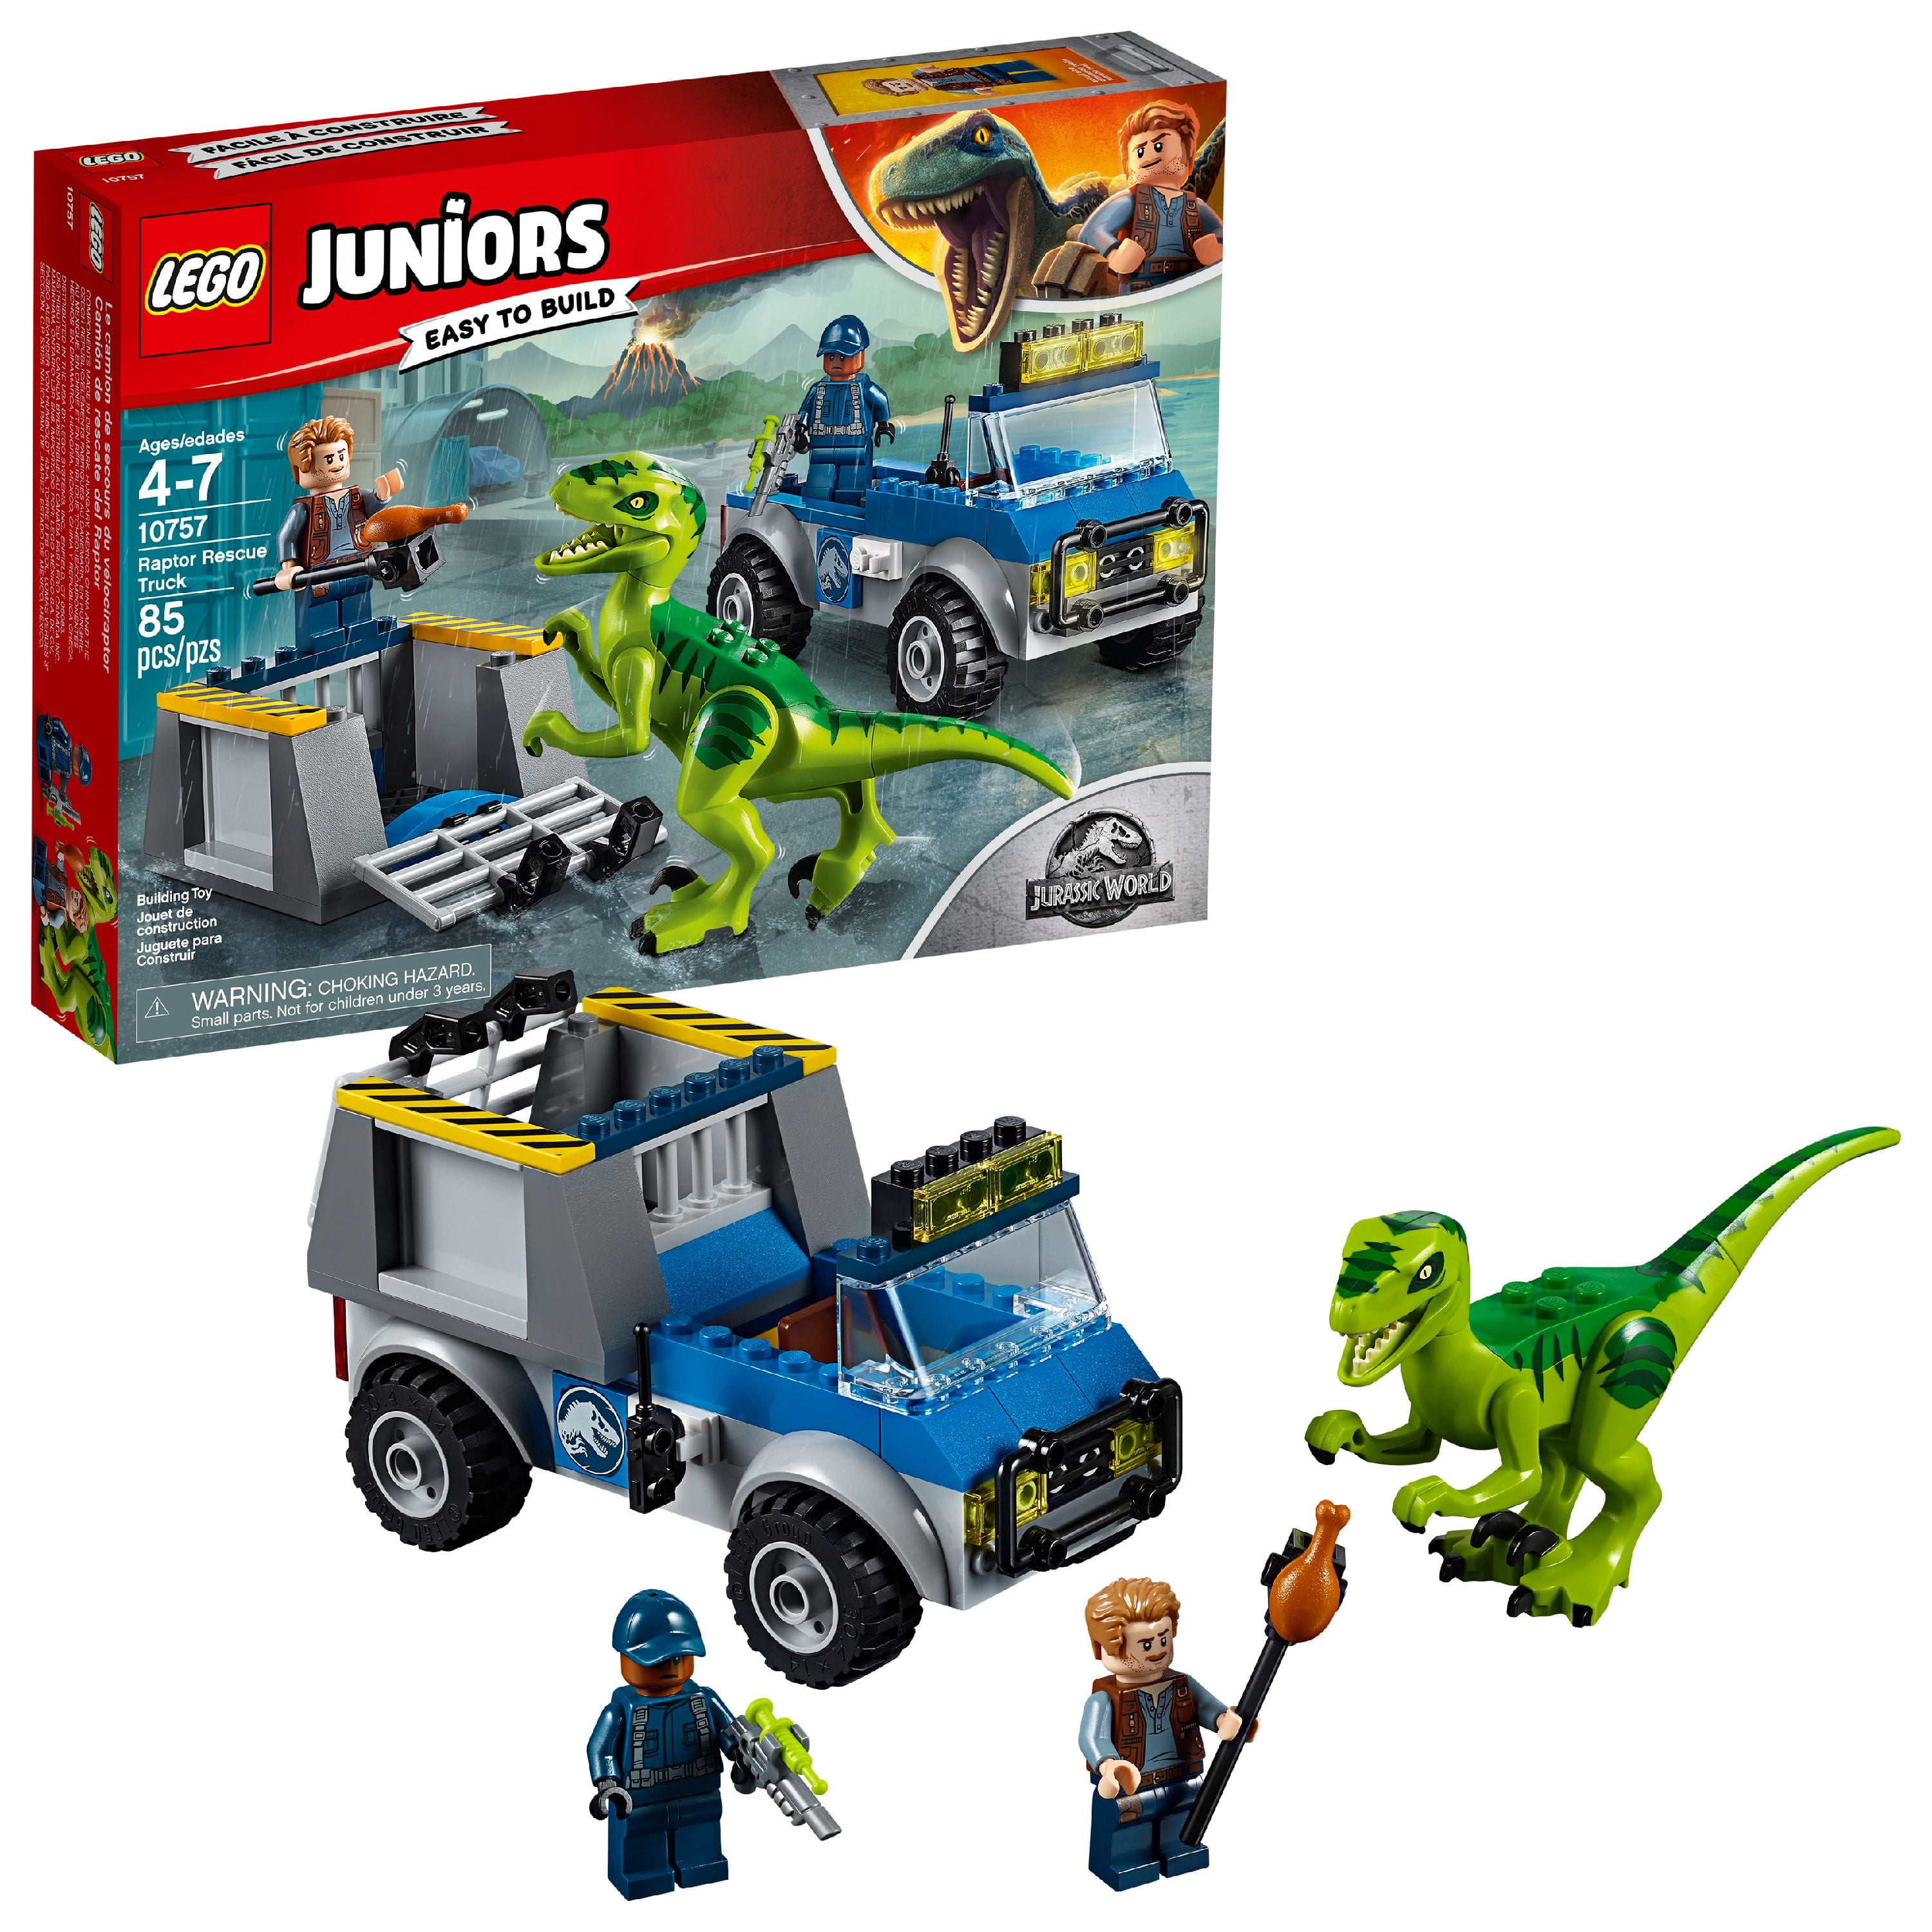 Details about   Jurassic Single Sale Dinosaurs Park T-Rex World Figures legoing Bricks Toys Buil 